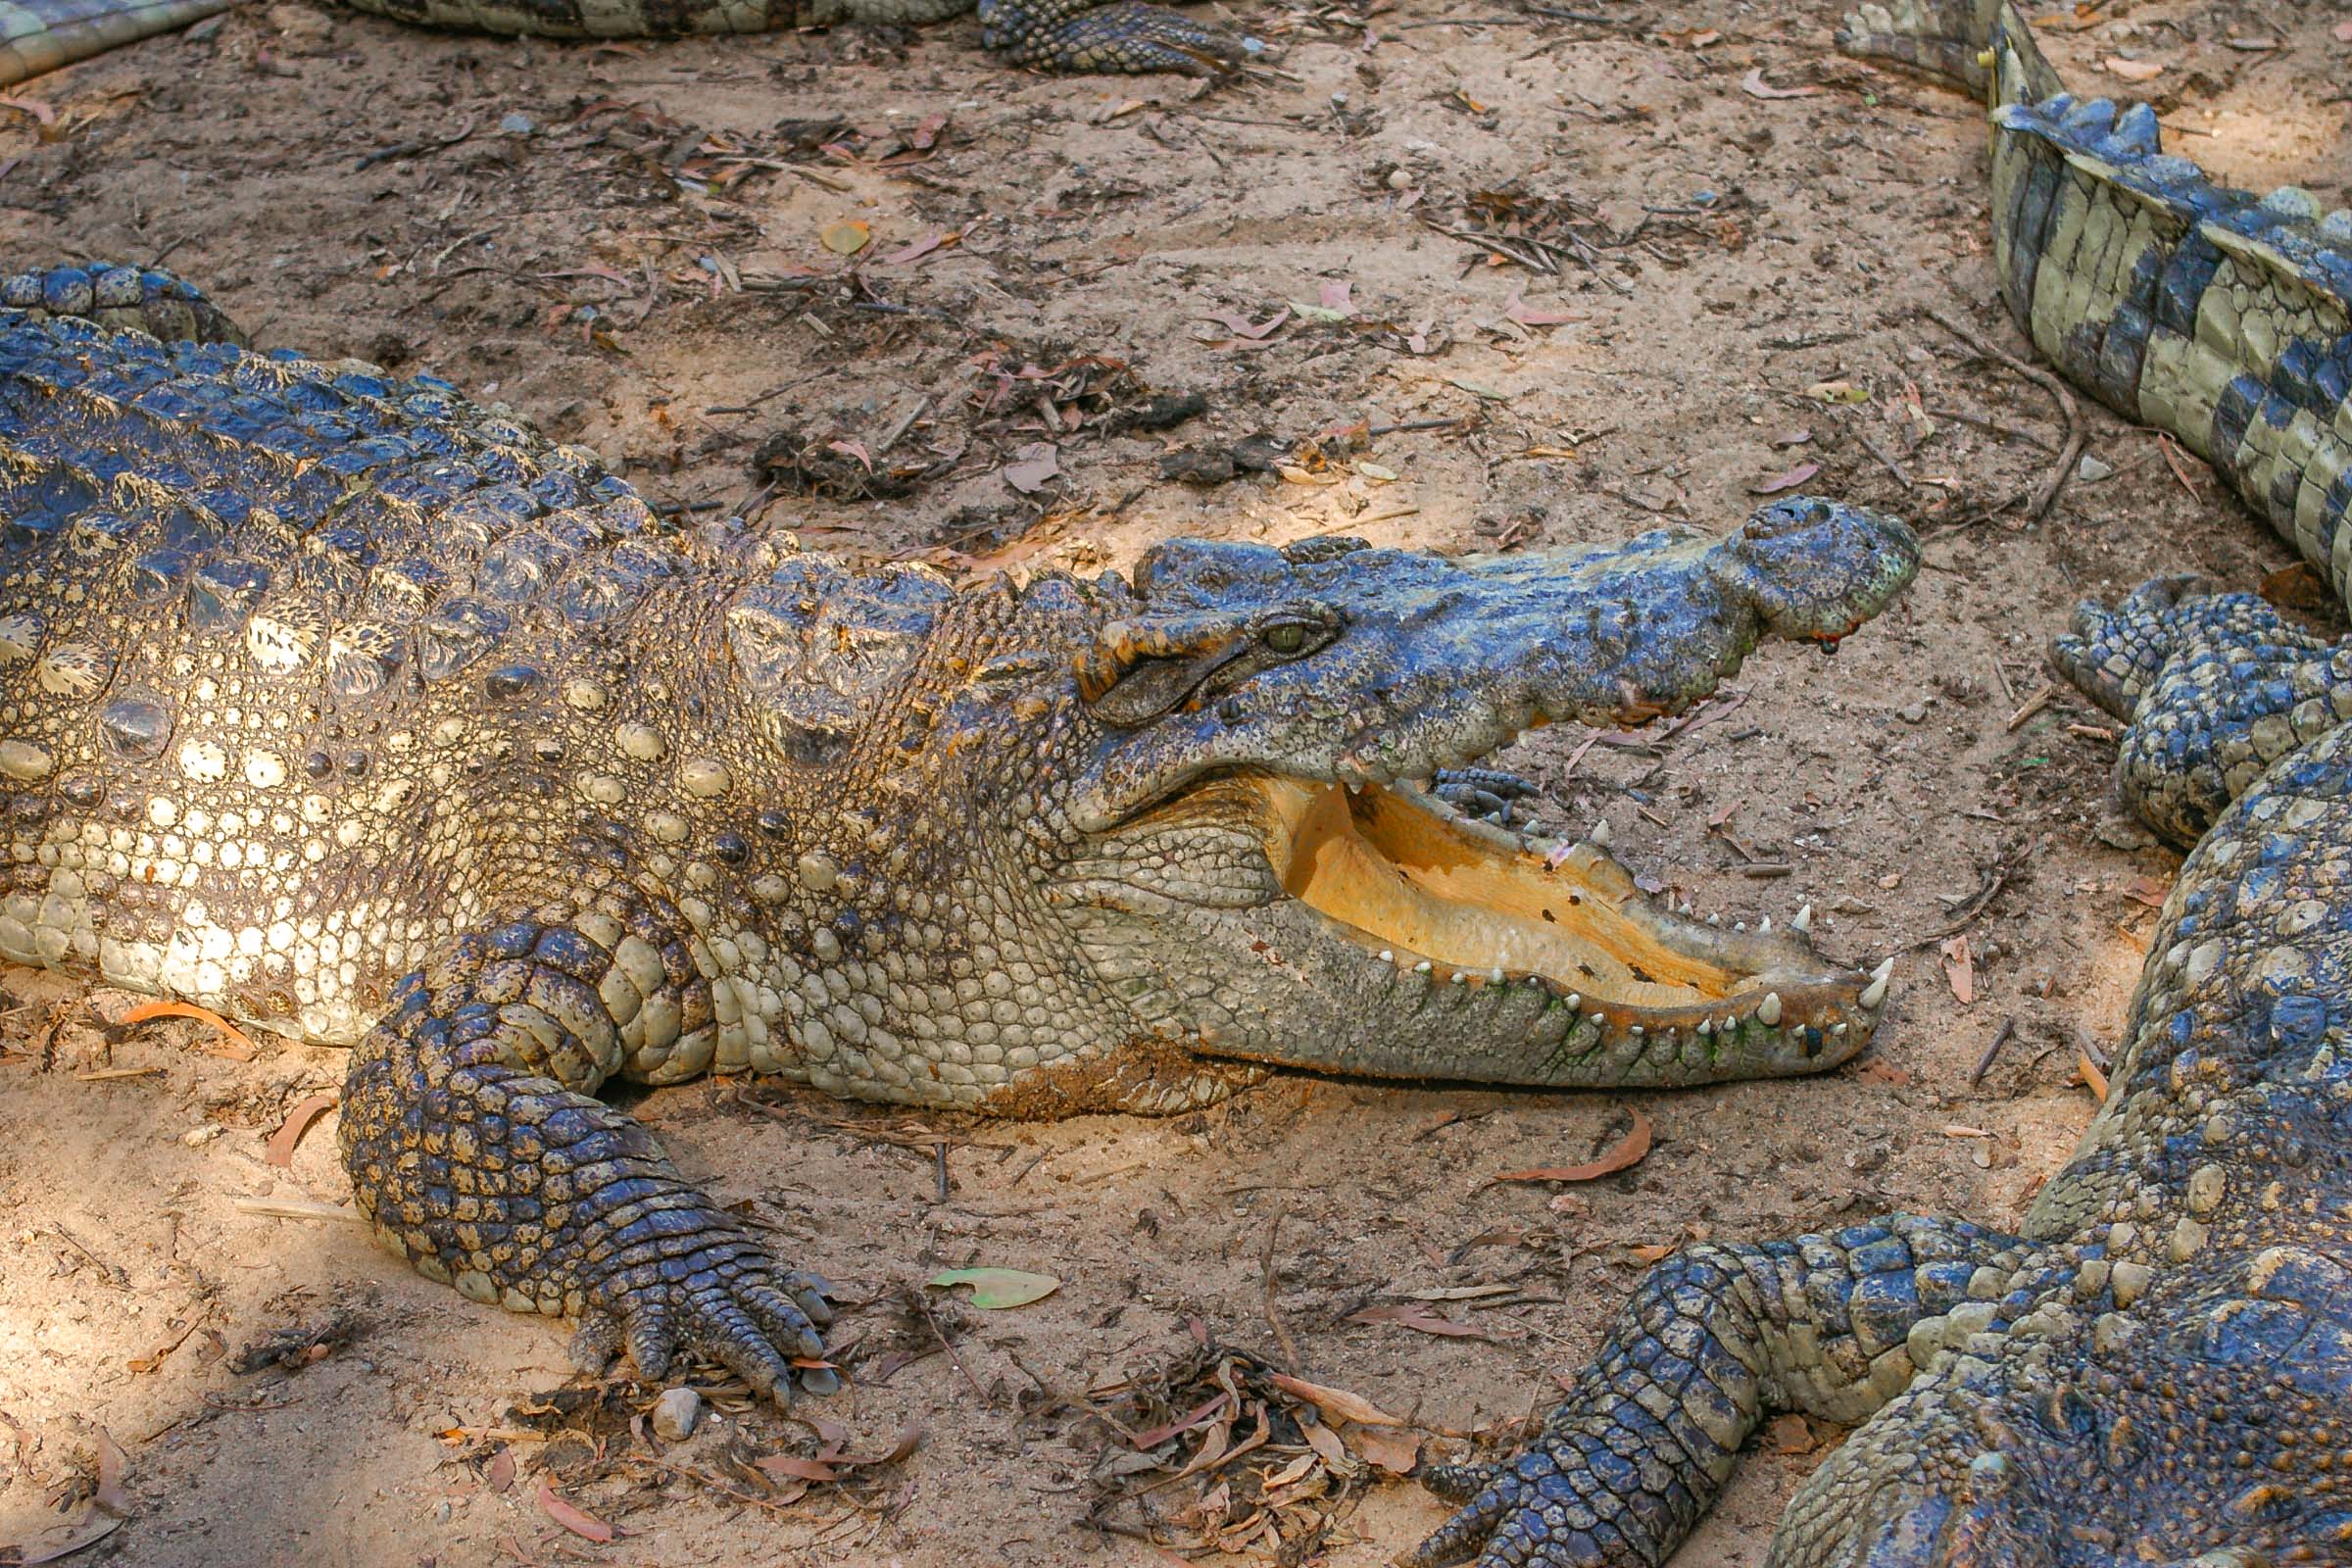 Ferme à Reptiles Koh Samui Thaïlande Blog Voyage